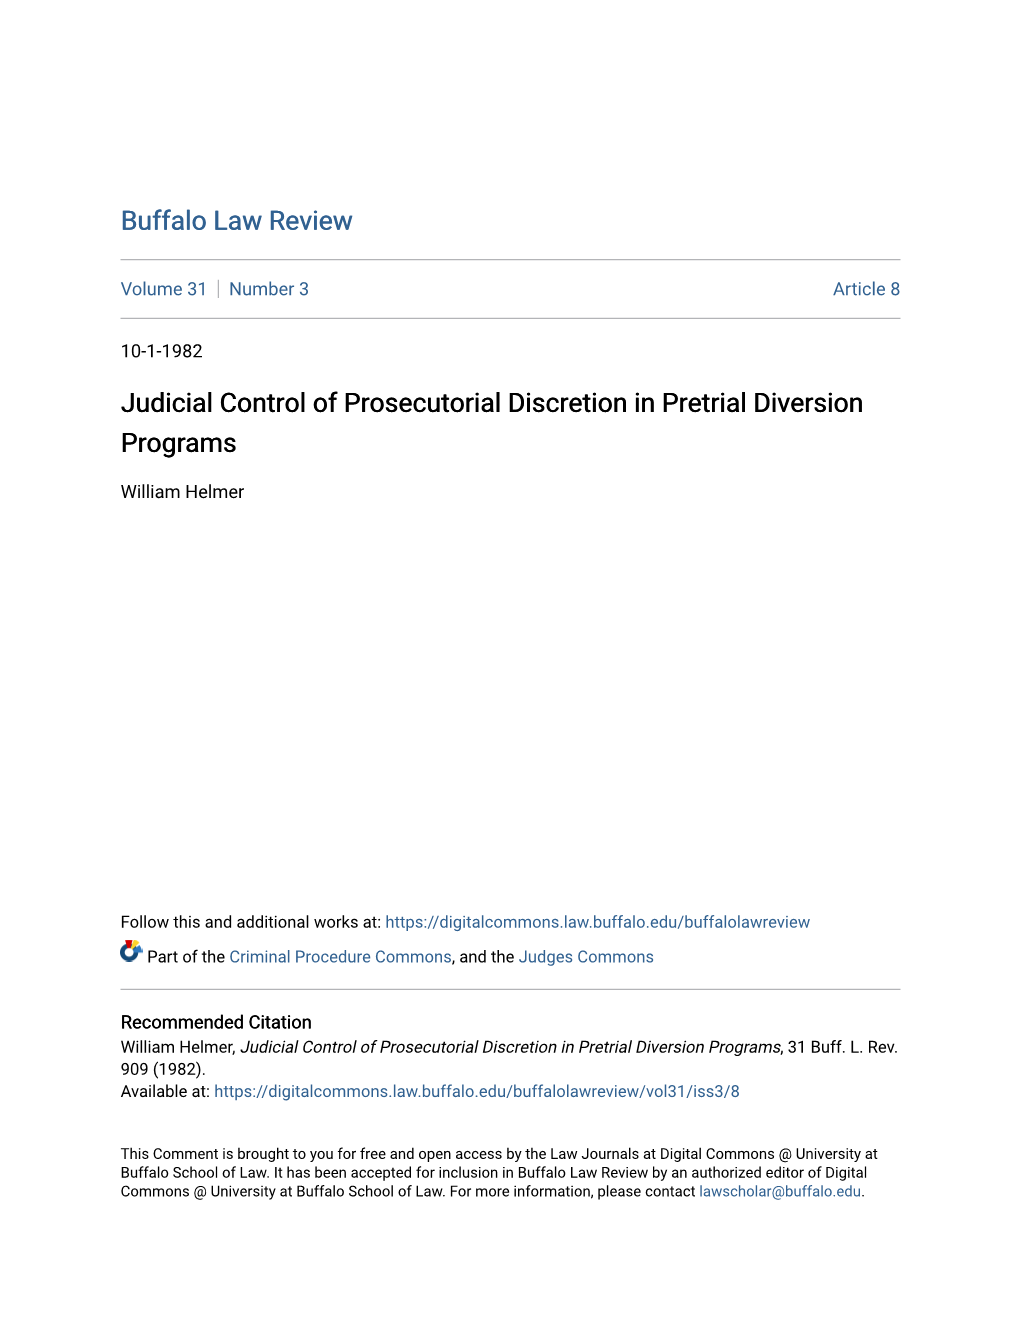 Judicial Control of Prosecutorial Discretion in Pretrial Diversion Programs